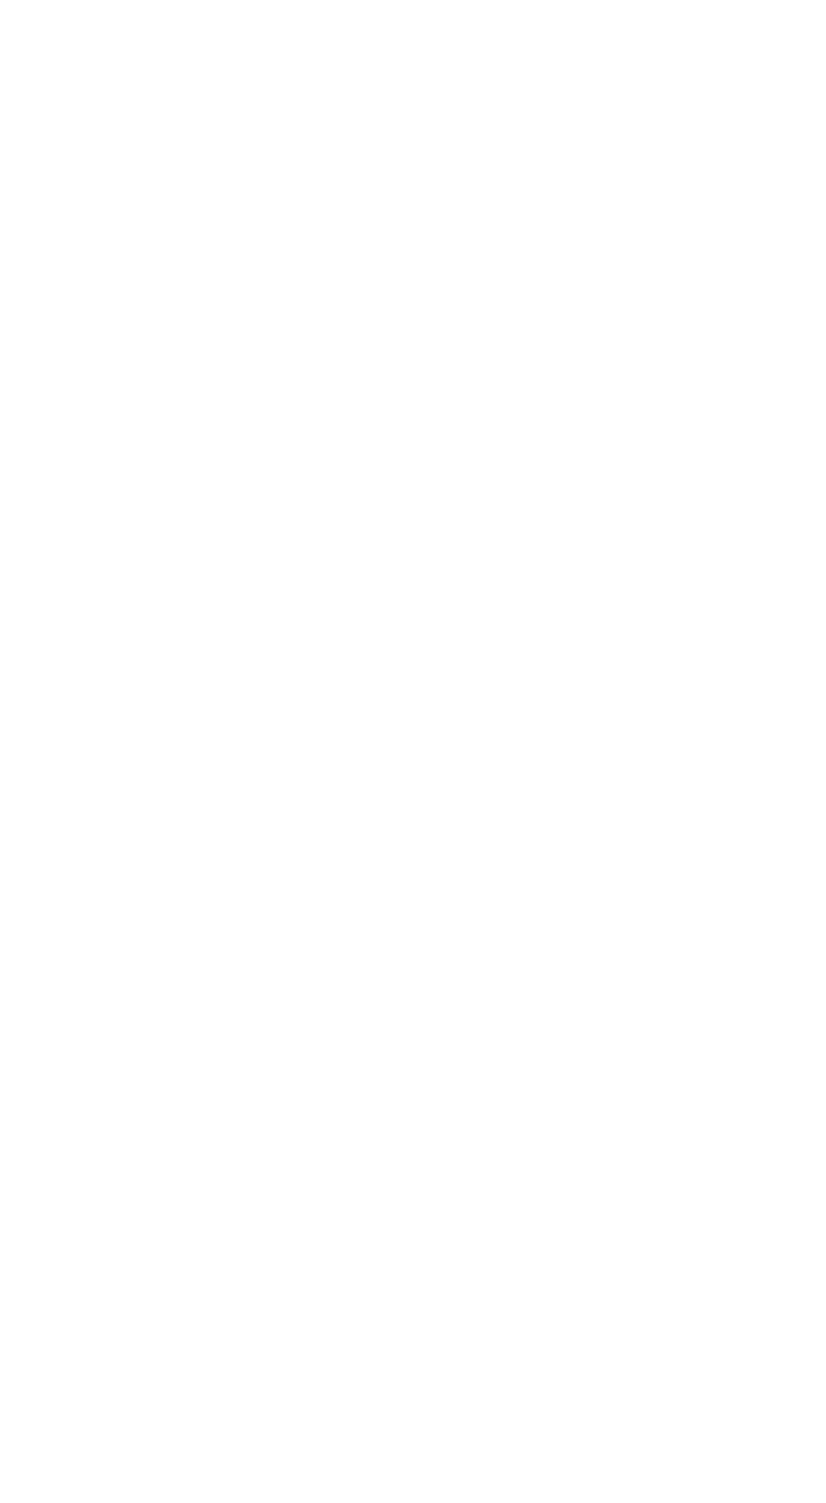 National Petroleum Services Company logo large for dark backgrounds (transparent PNG)